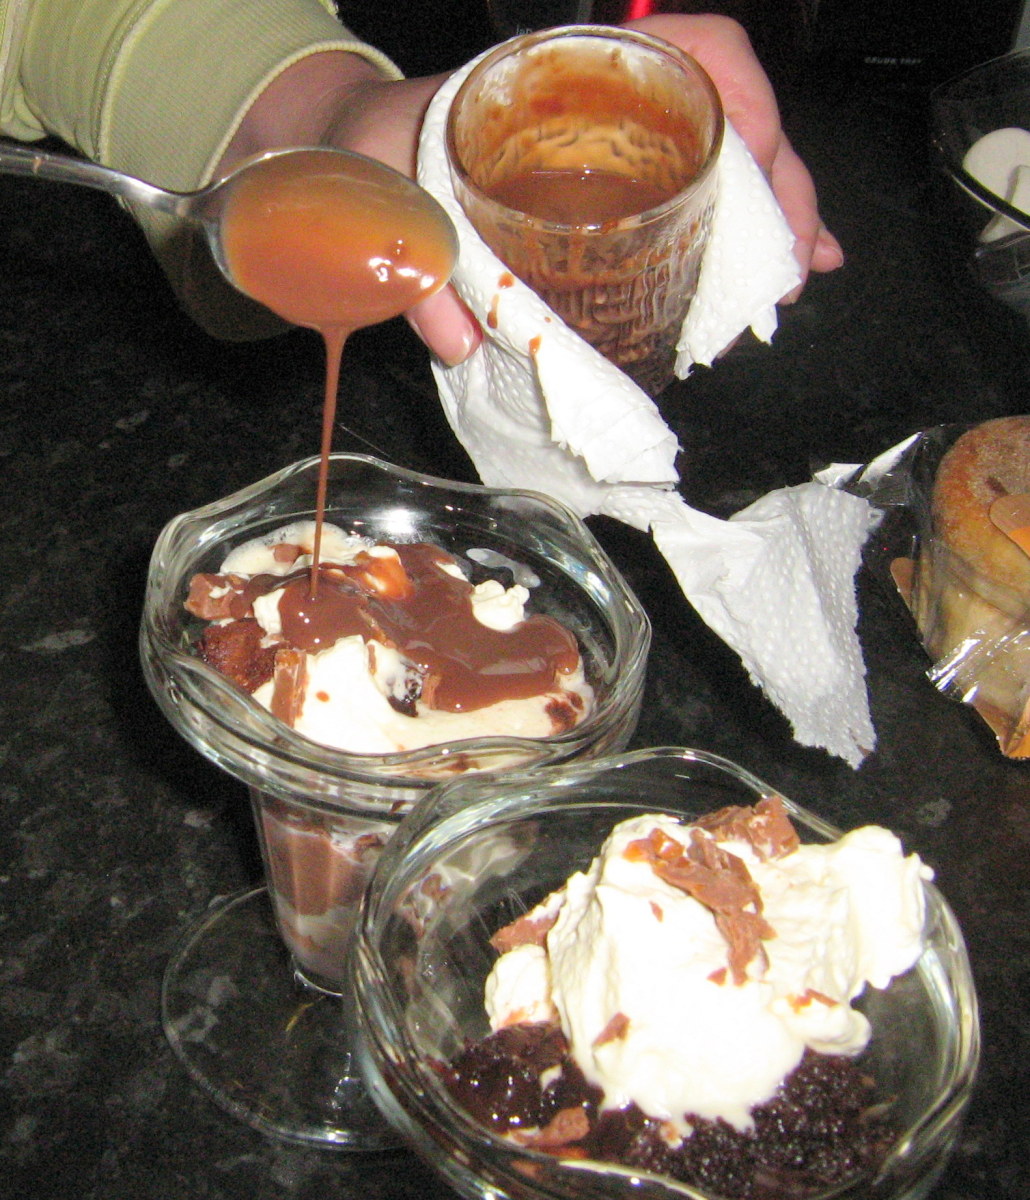 Recipe for Chocolate Sponge Dessert and Whipped Cream